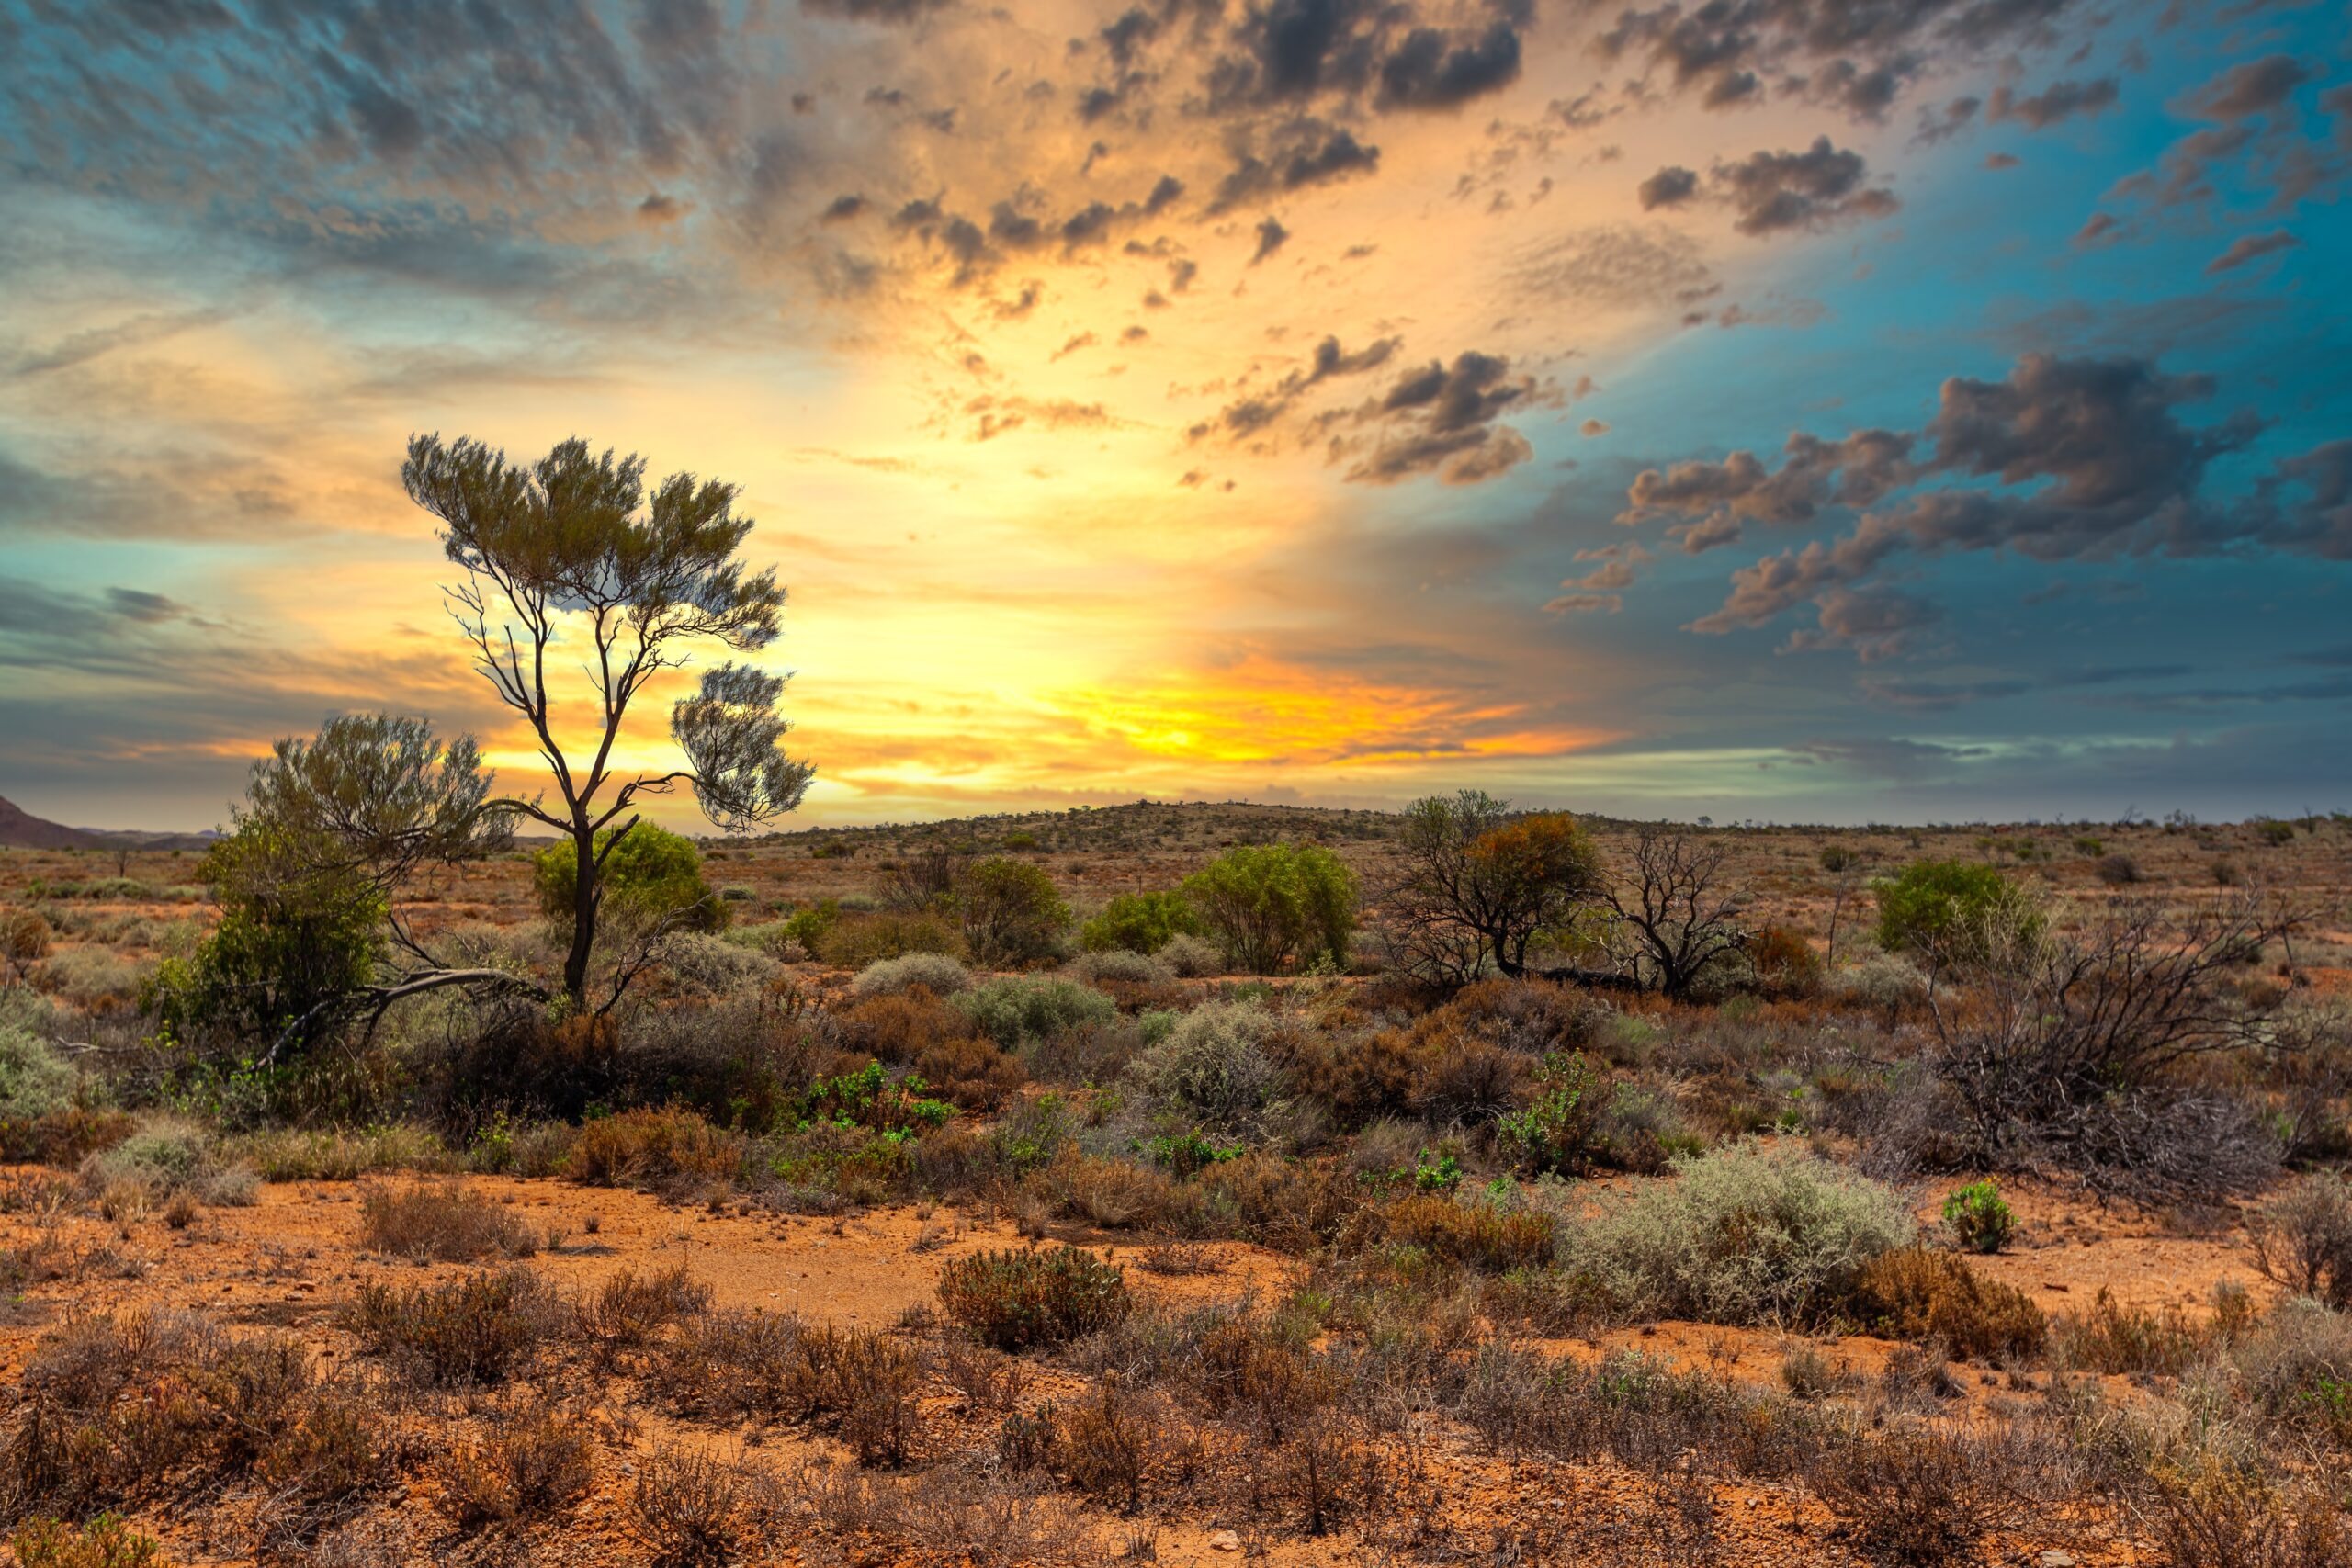 Sunset over a beautiful Australian outback